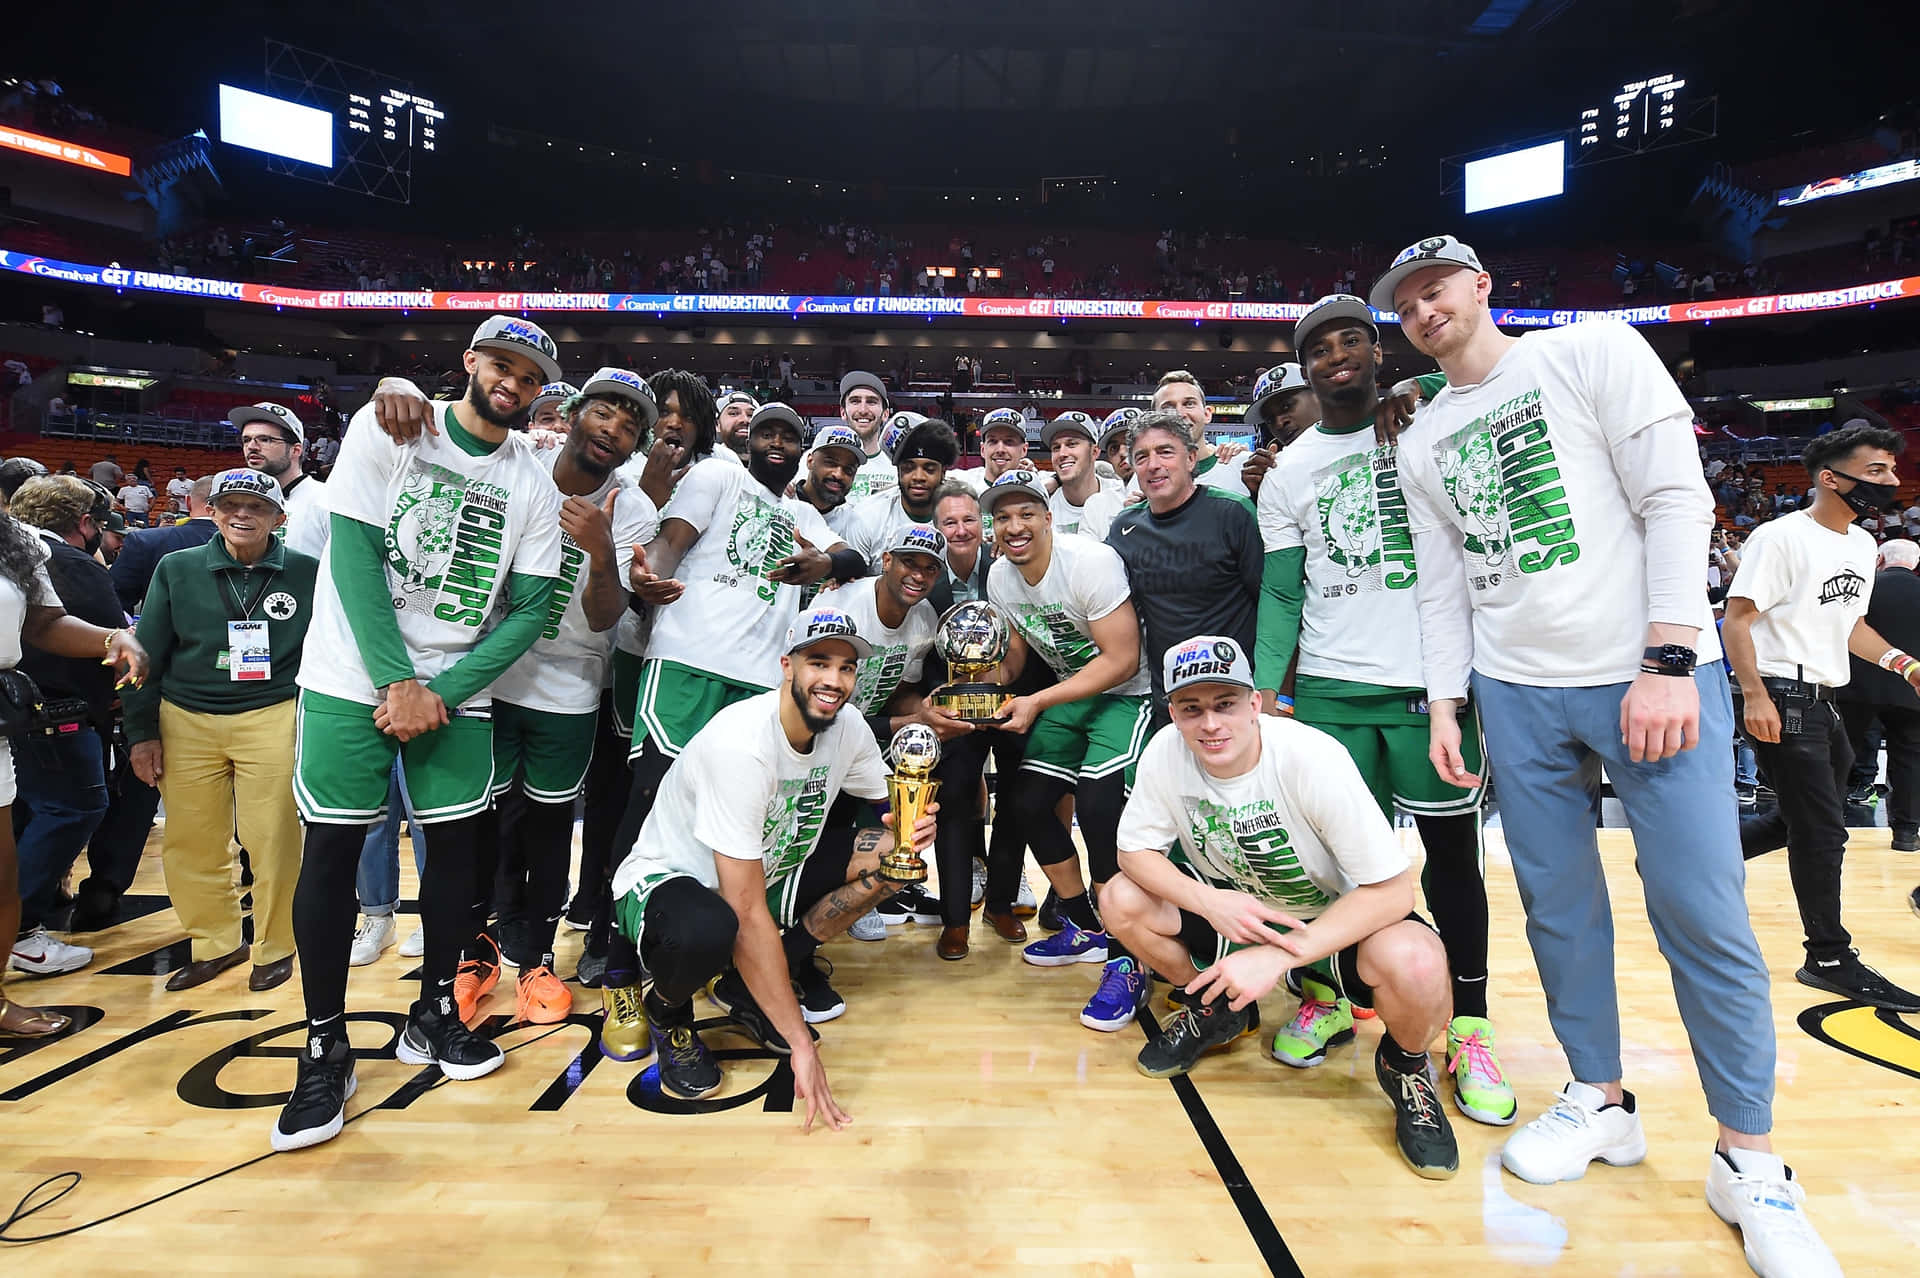 Imagencelebrando La Gloria Del Campeonato De Los Celtics